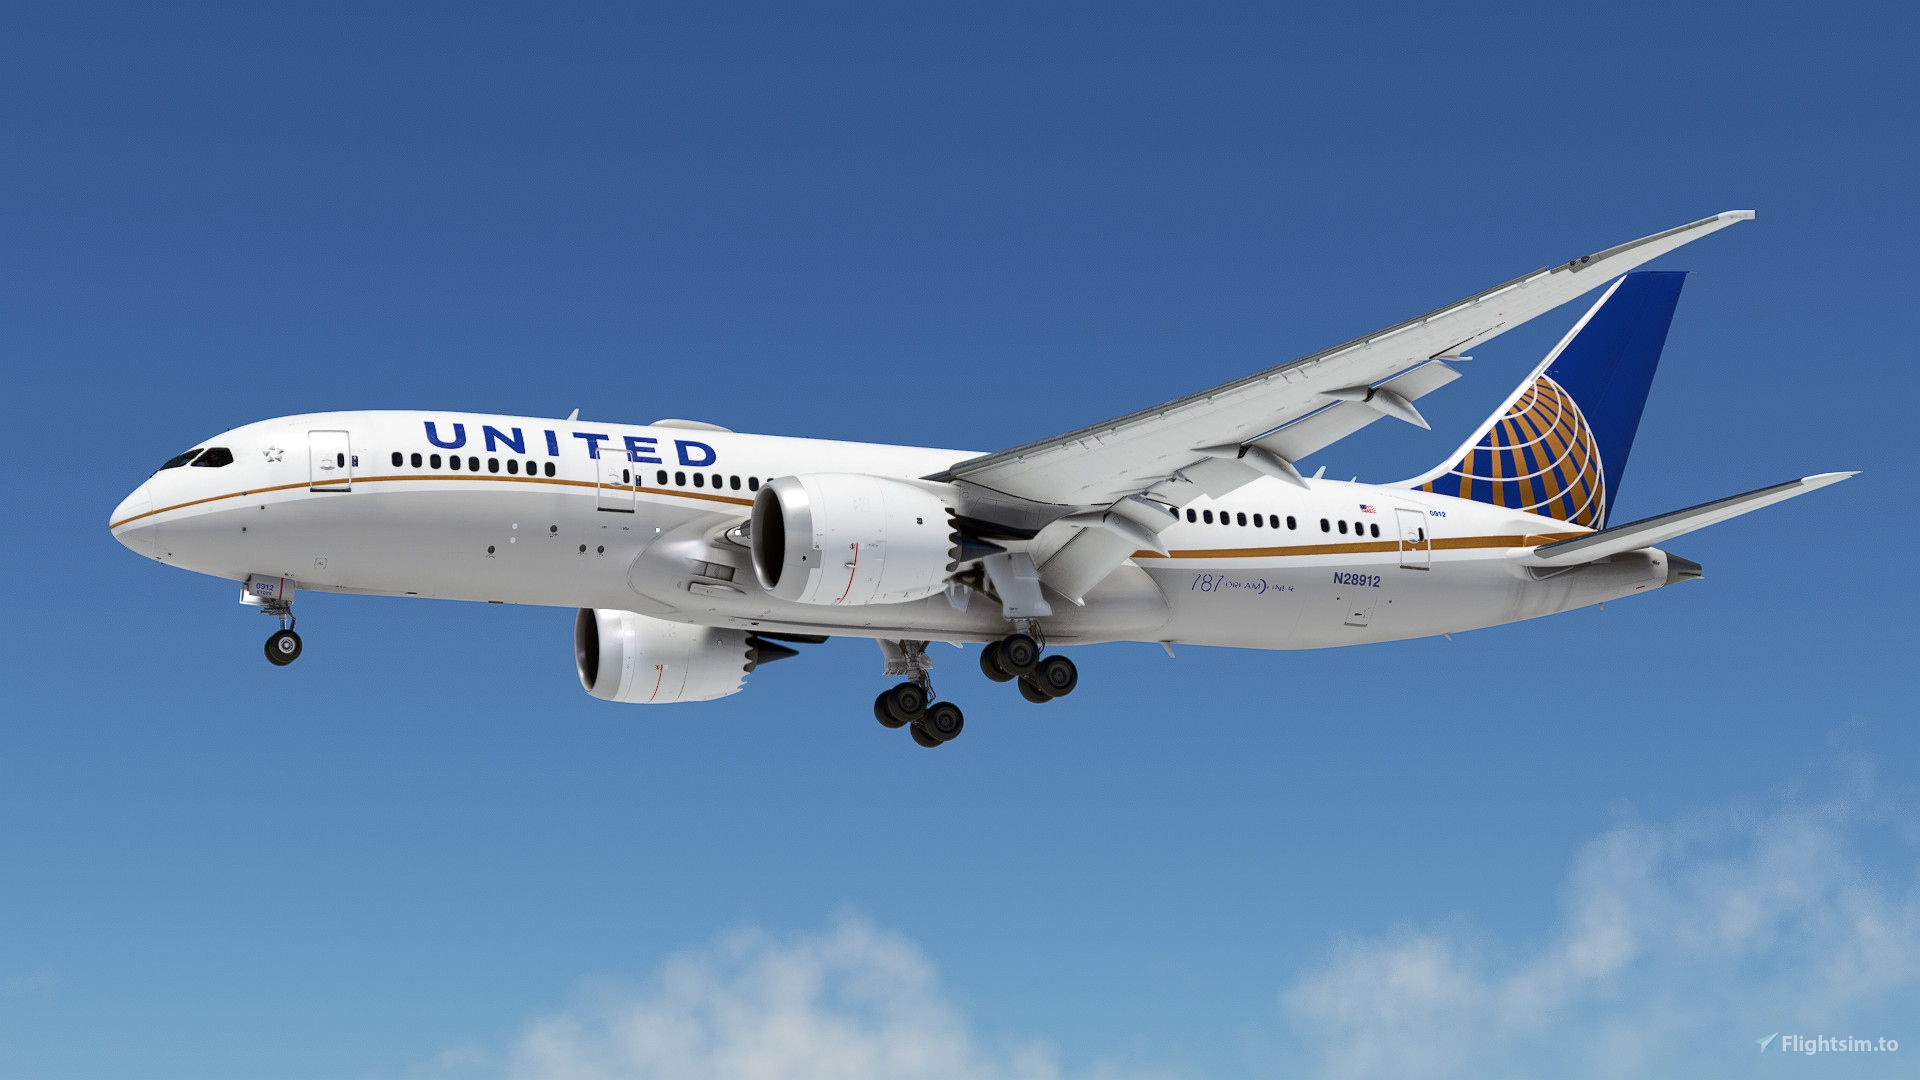 United Airlines N28912 | Kuro B787-8 v2 | (8K) for Microsoft 